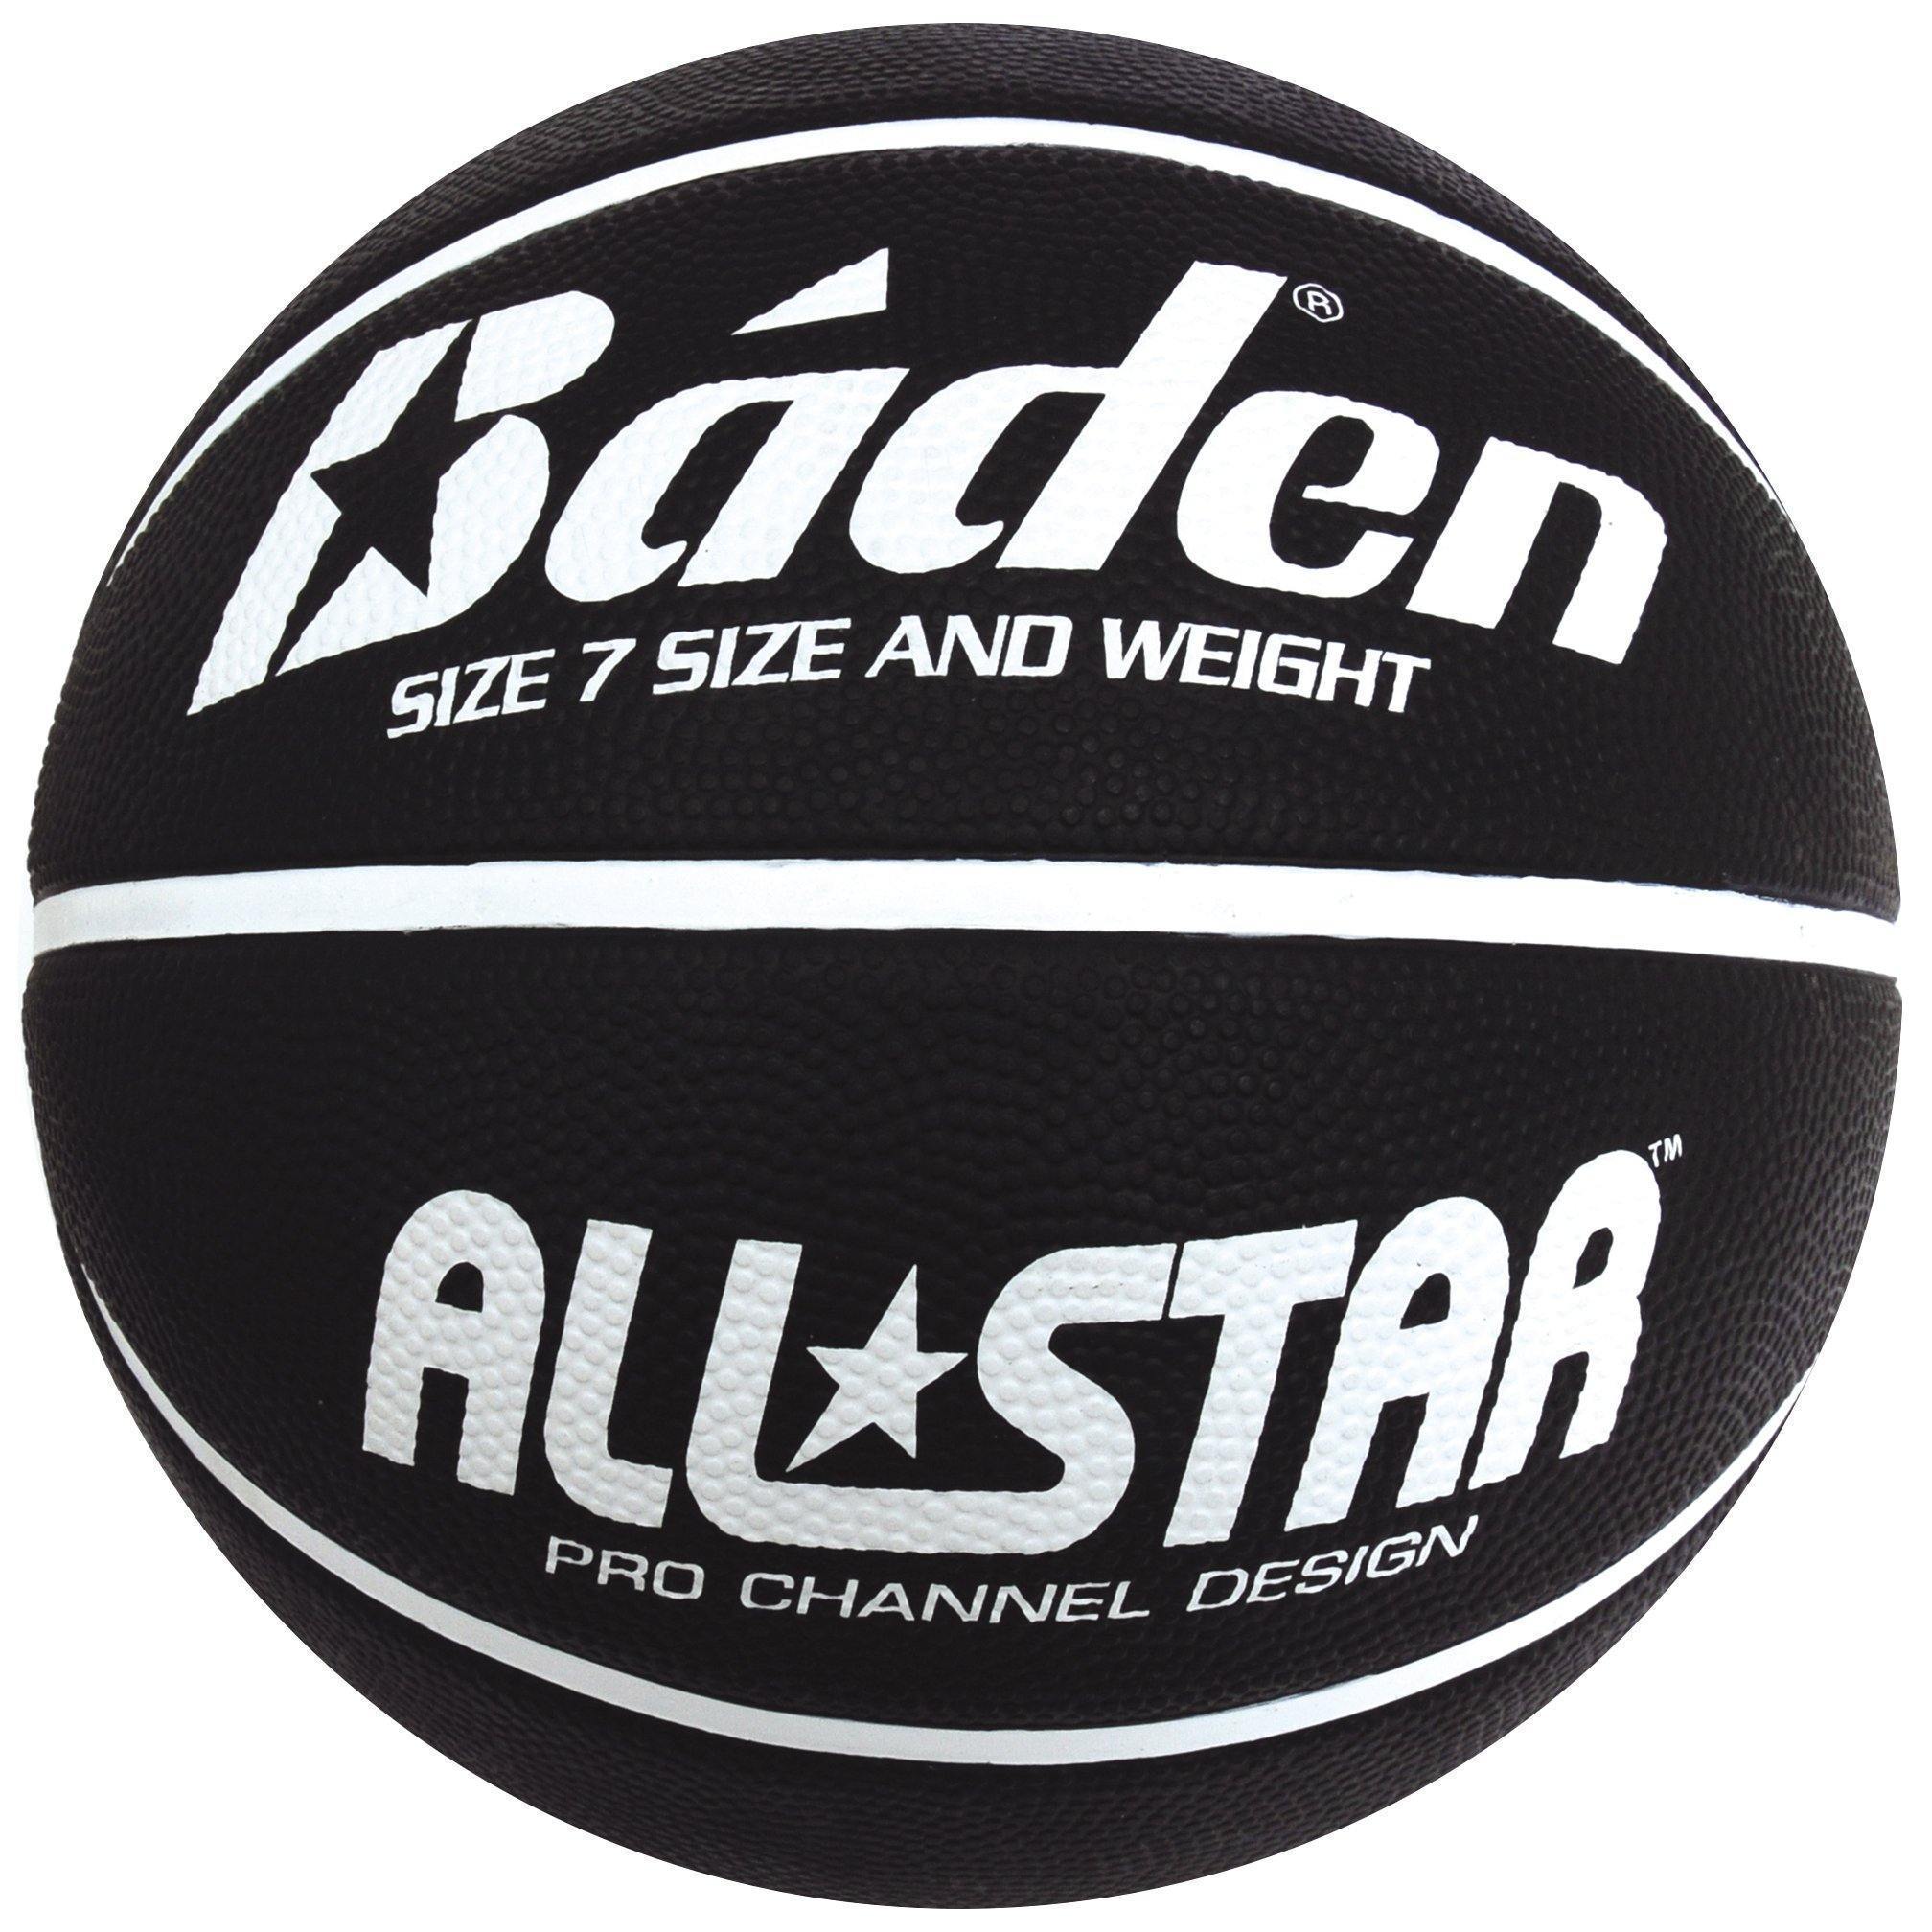 Baden All Star Basketball Size 7 Black - Sport Essentials